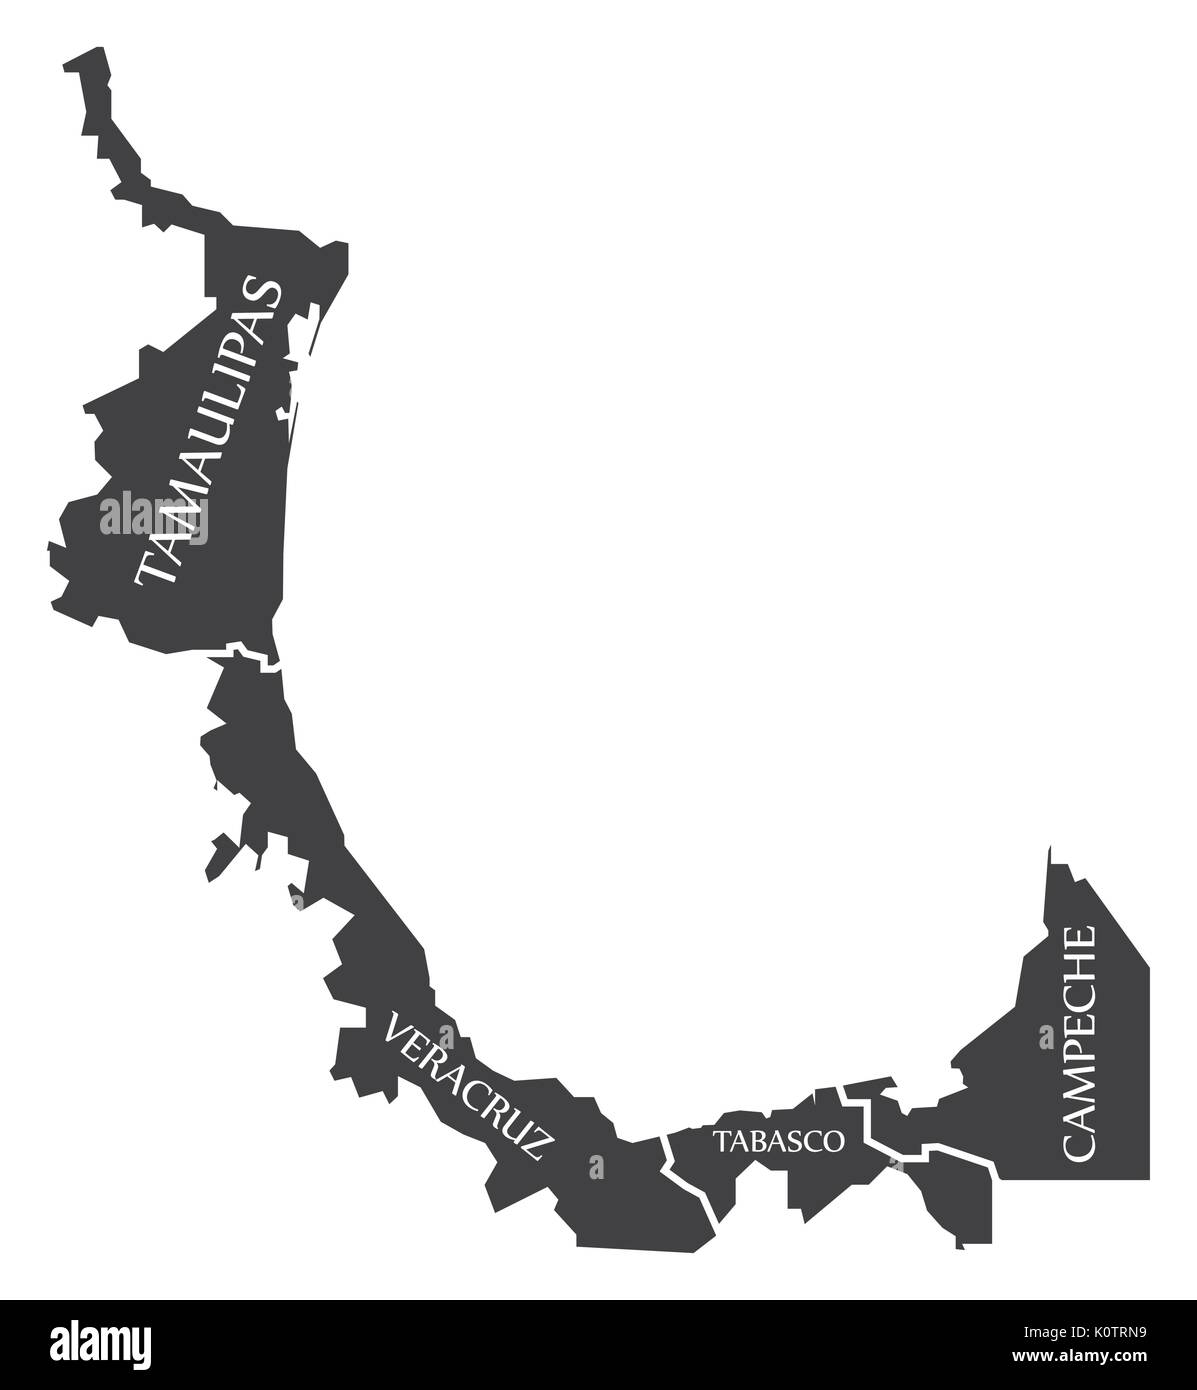 Tamaulipas - Veracruz - Tabasco - Campeche Map Mexico illustration Stock Vector